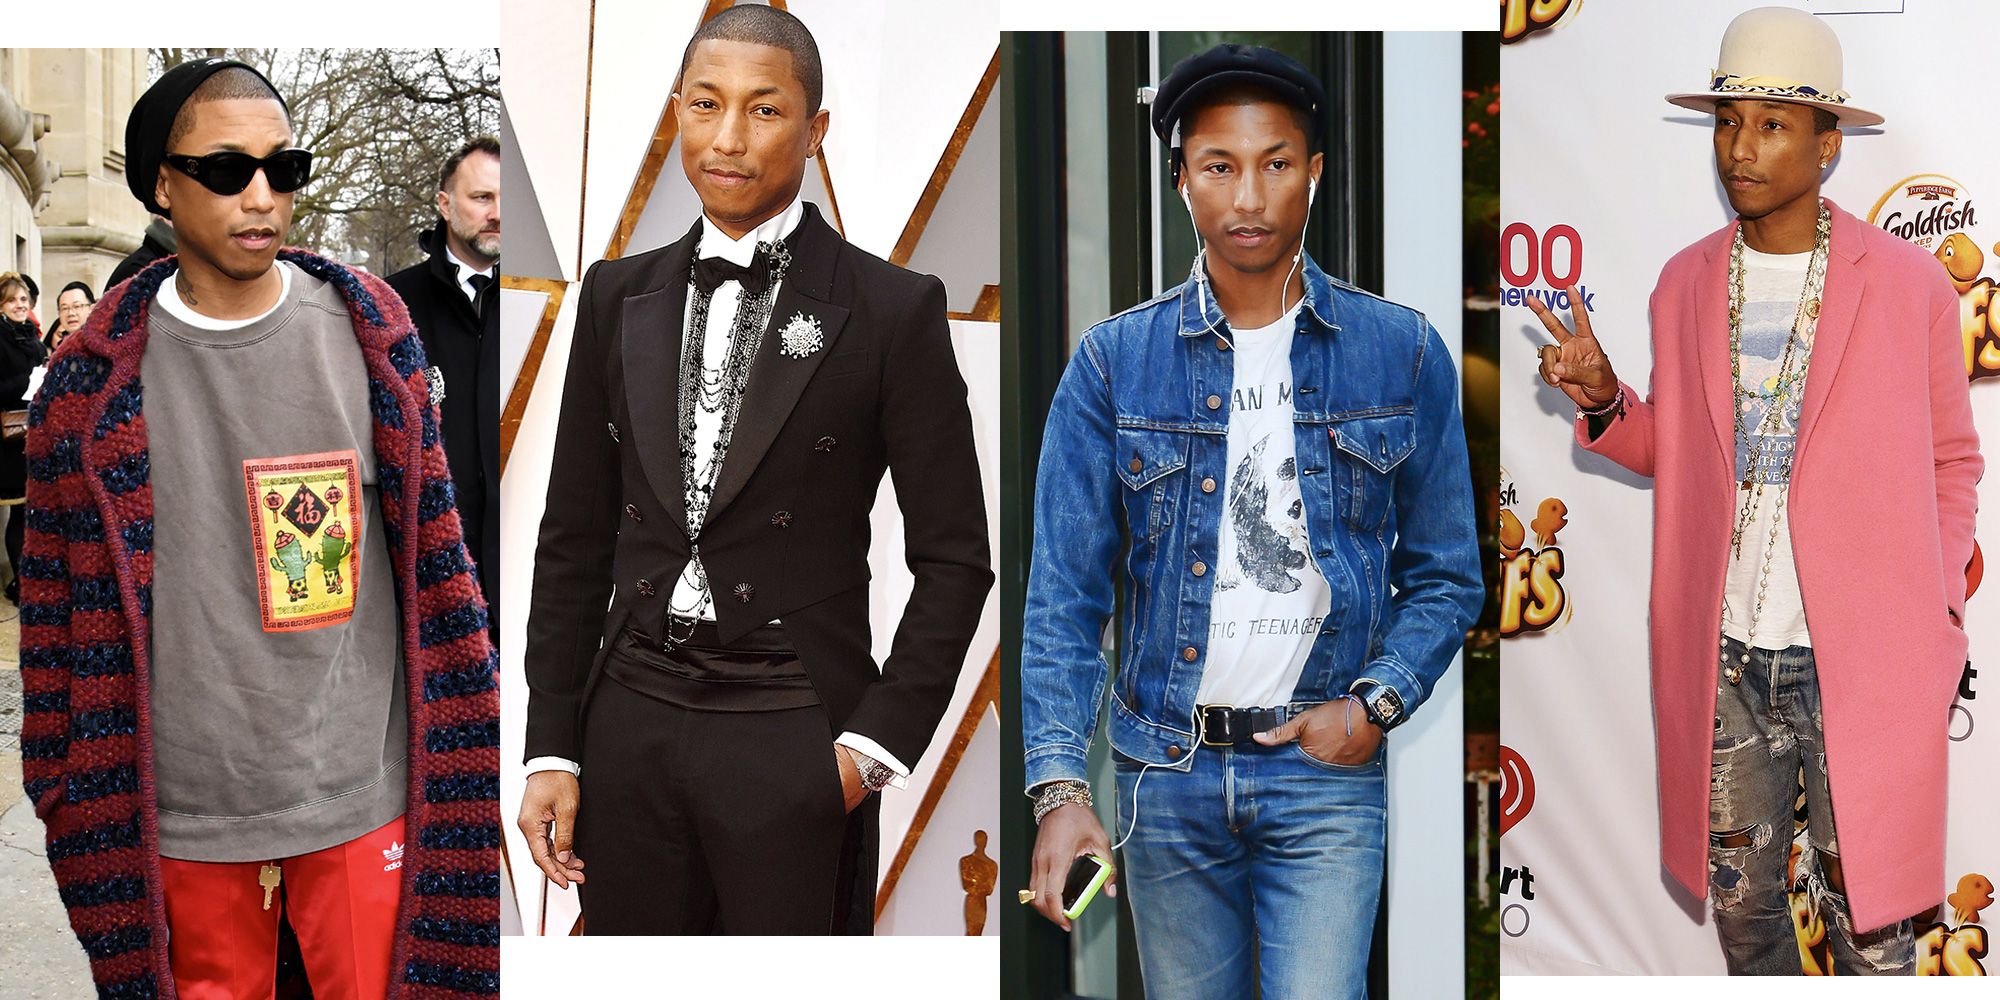 The Pharrell Williams Style Lookbook